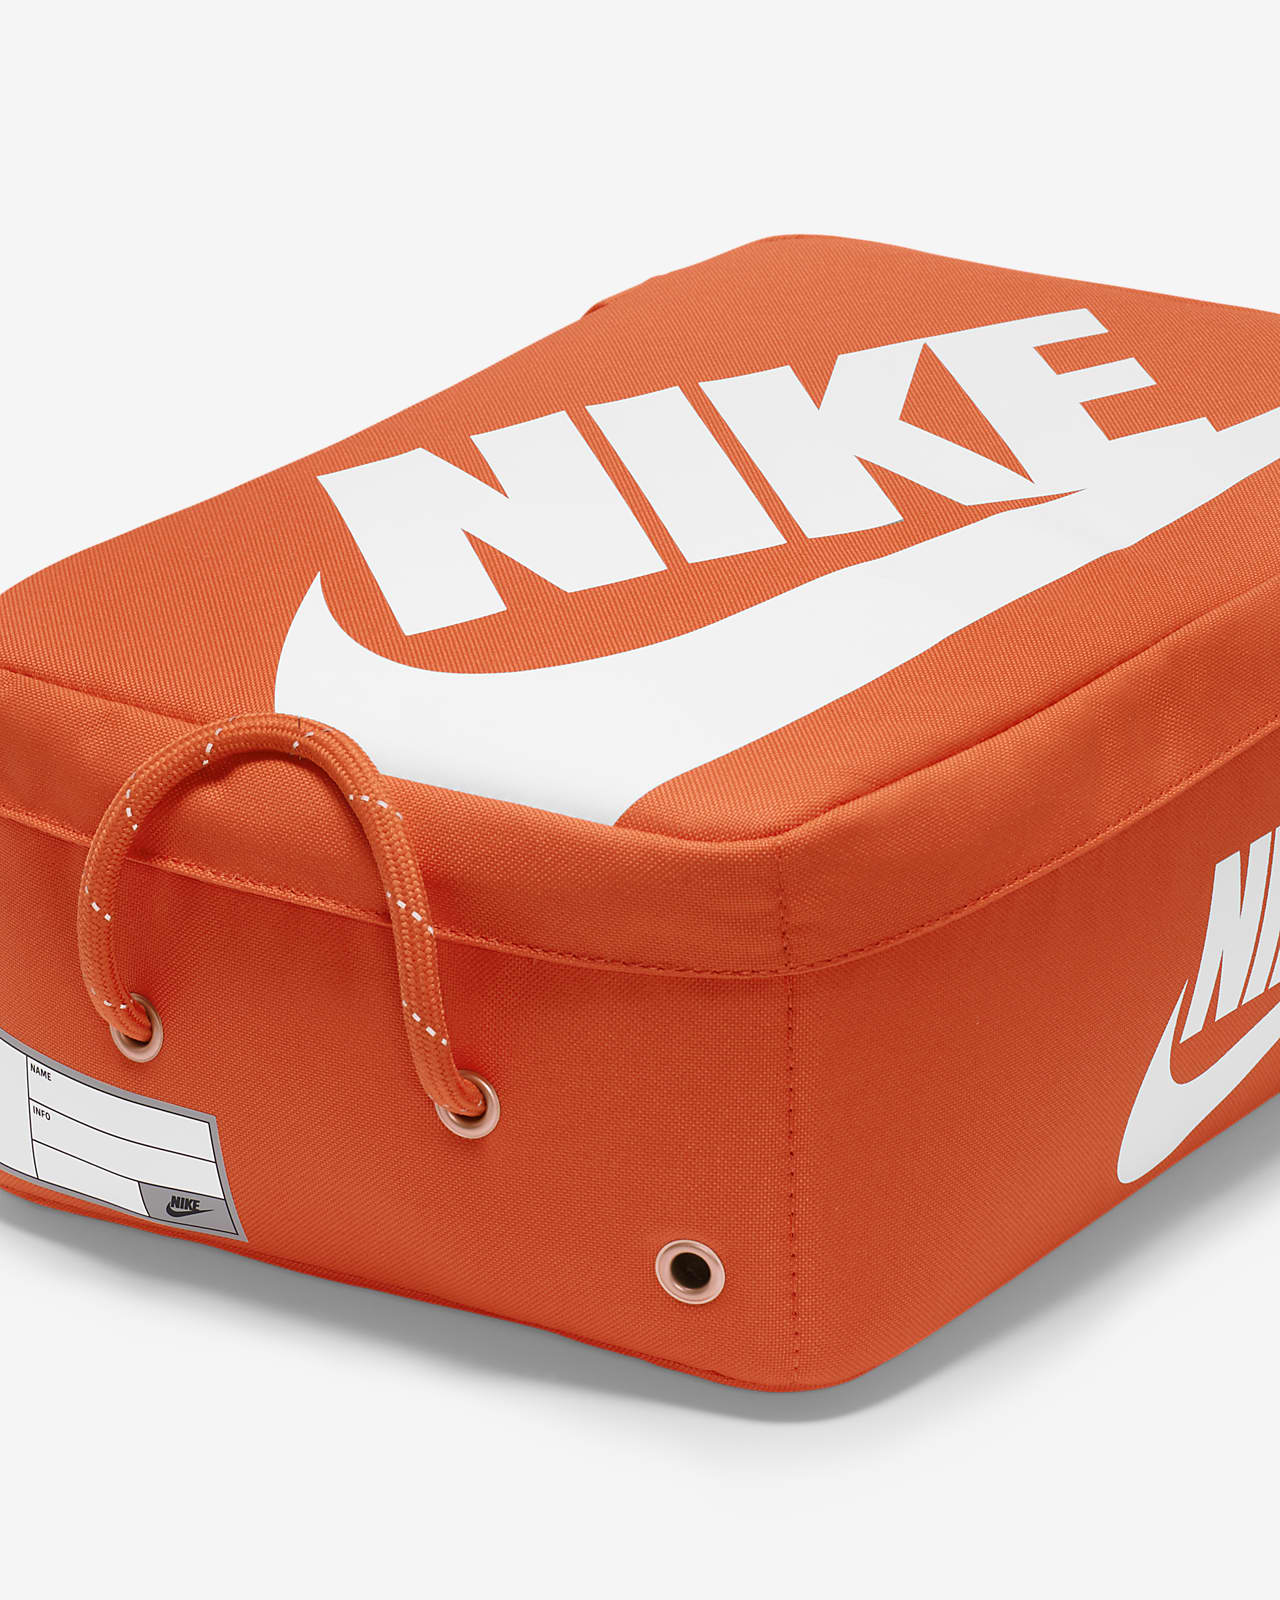 shoe box travel bag